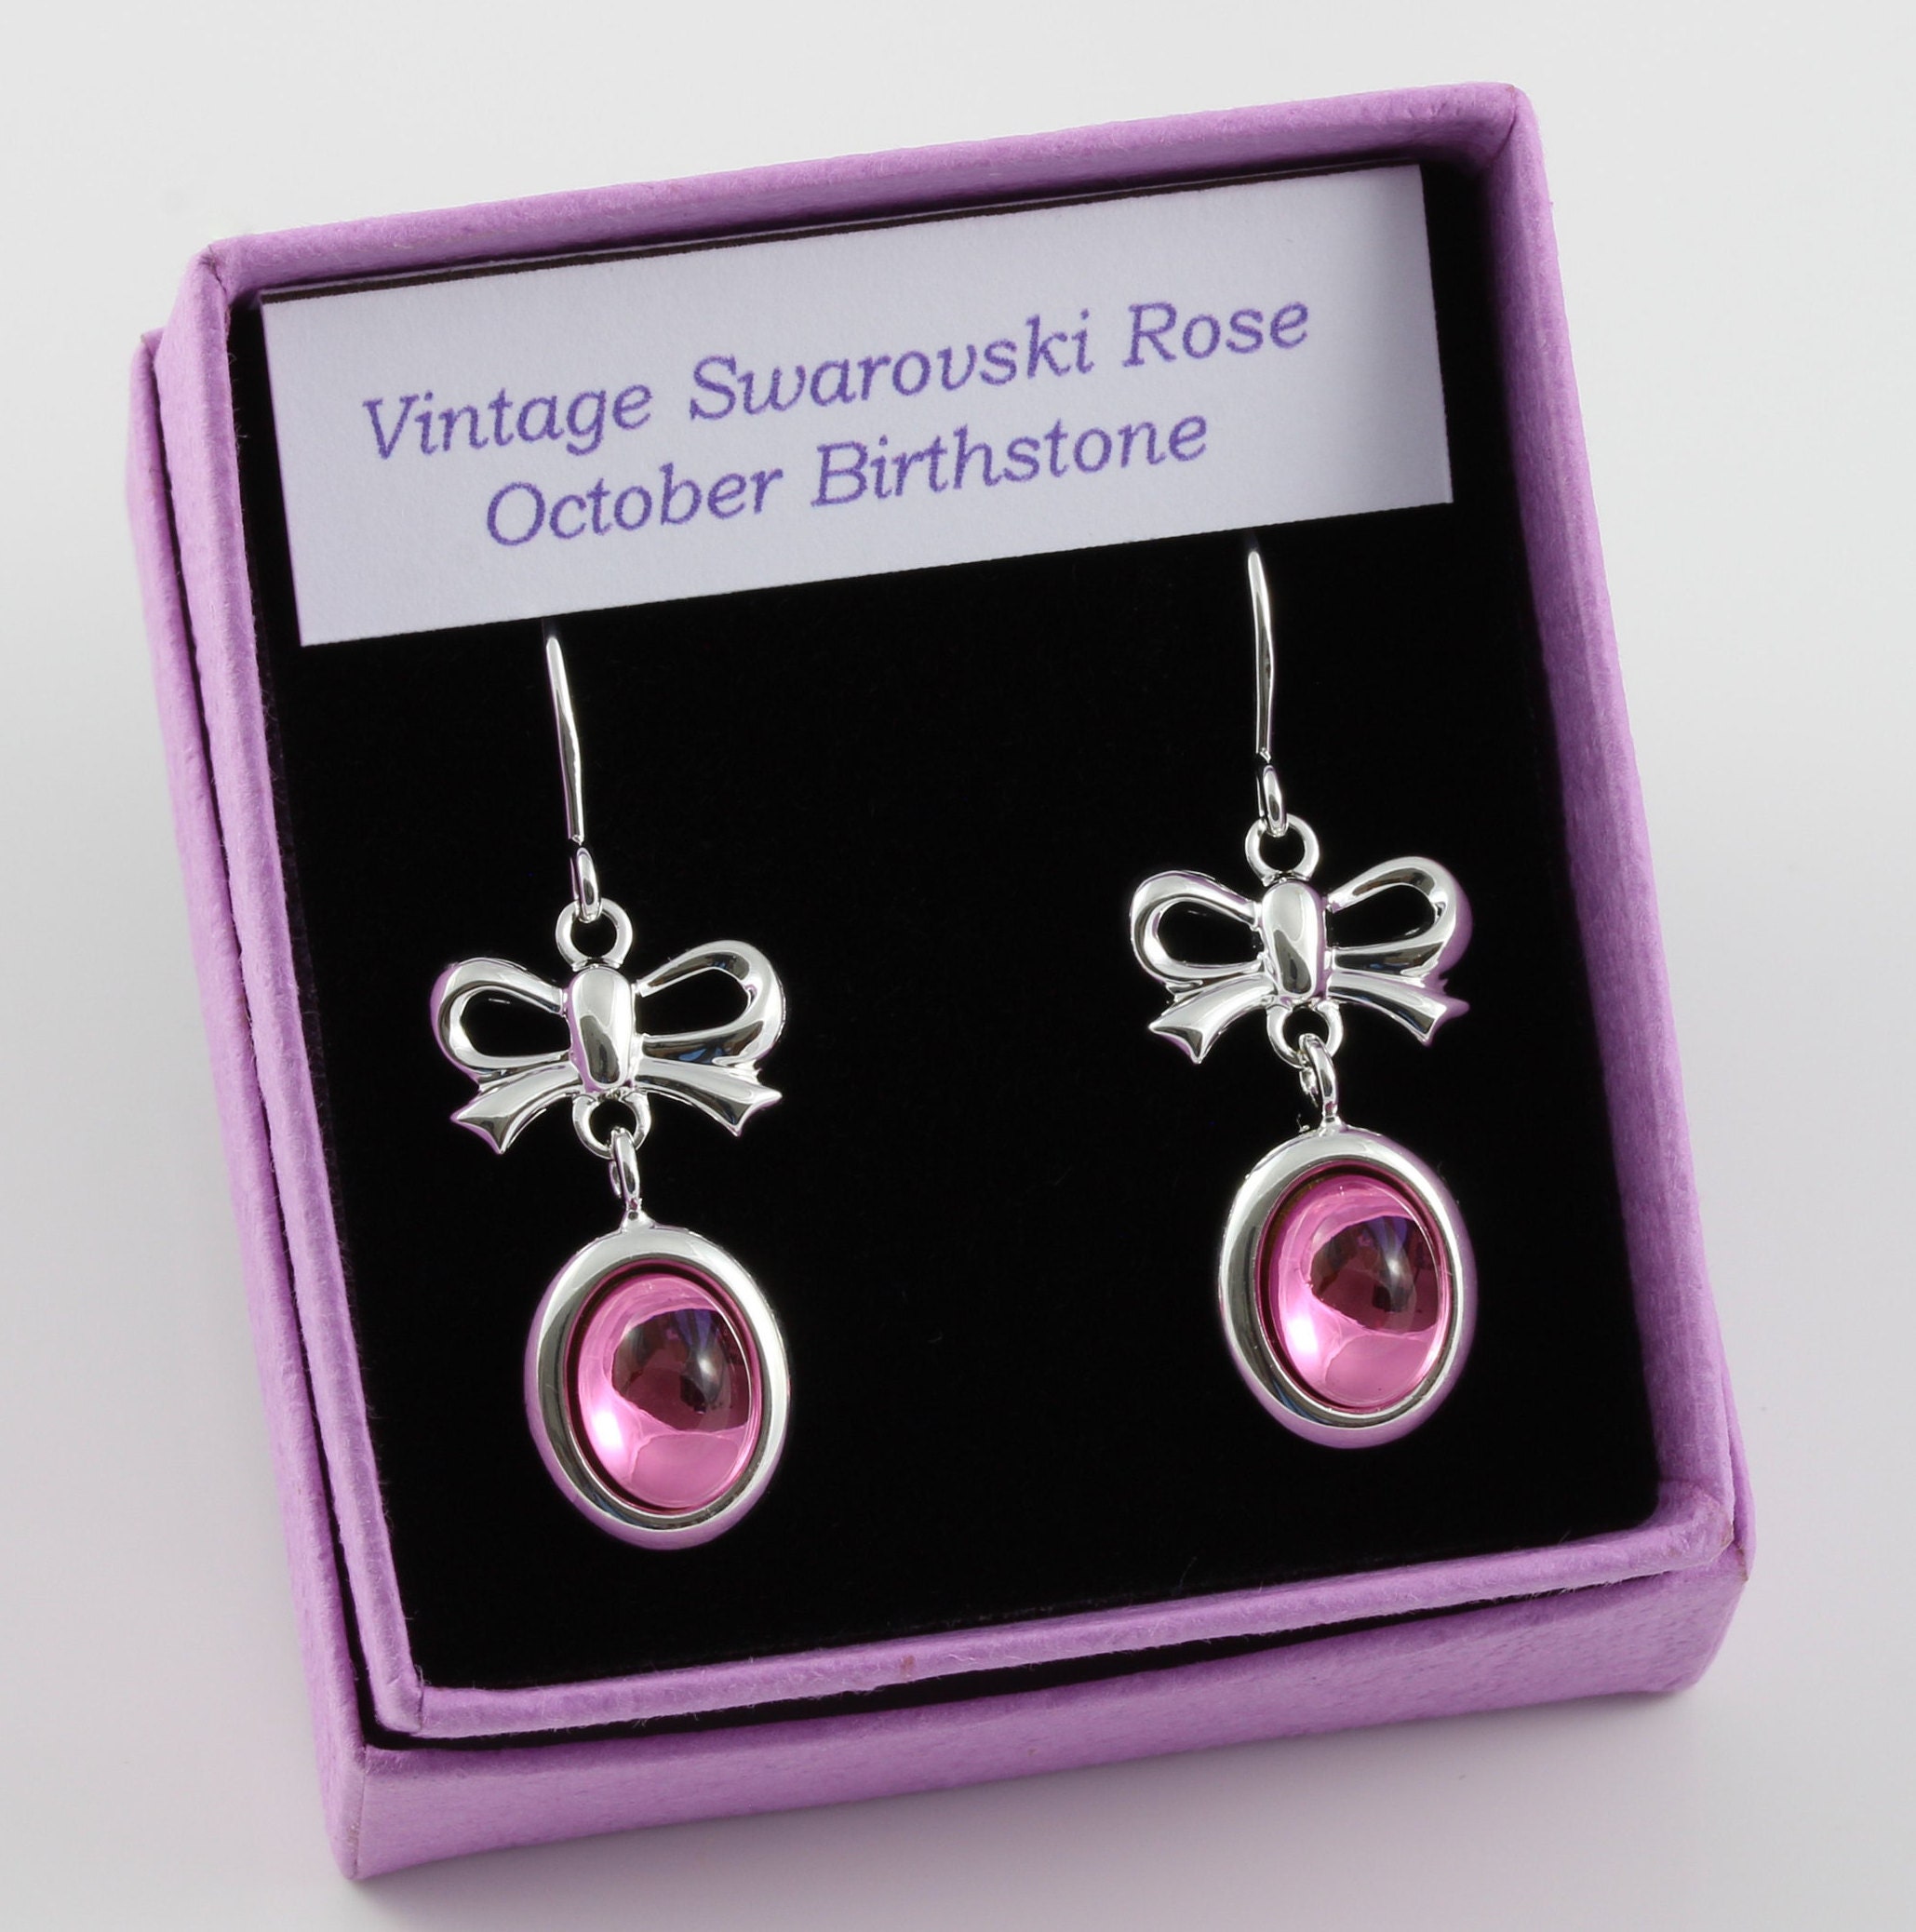 October Birthstone Vintage Swarovski Rose Crystal Cabochon & Bow Drop Earrings